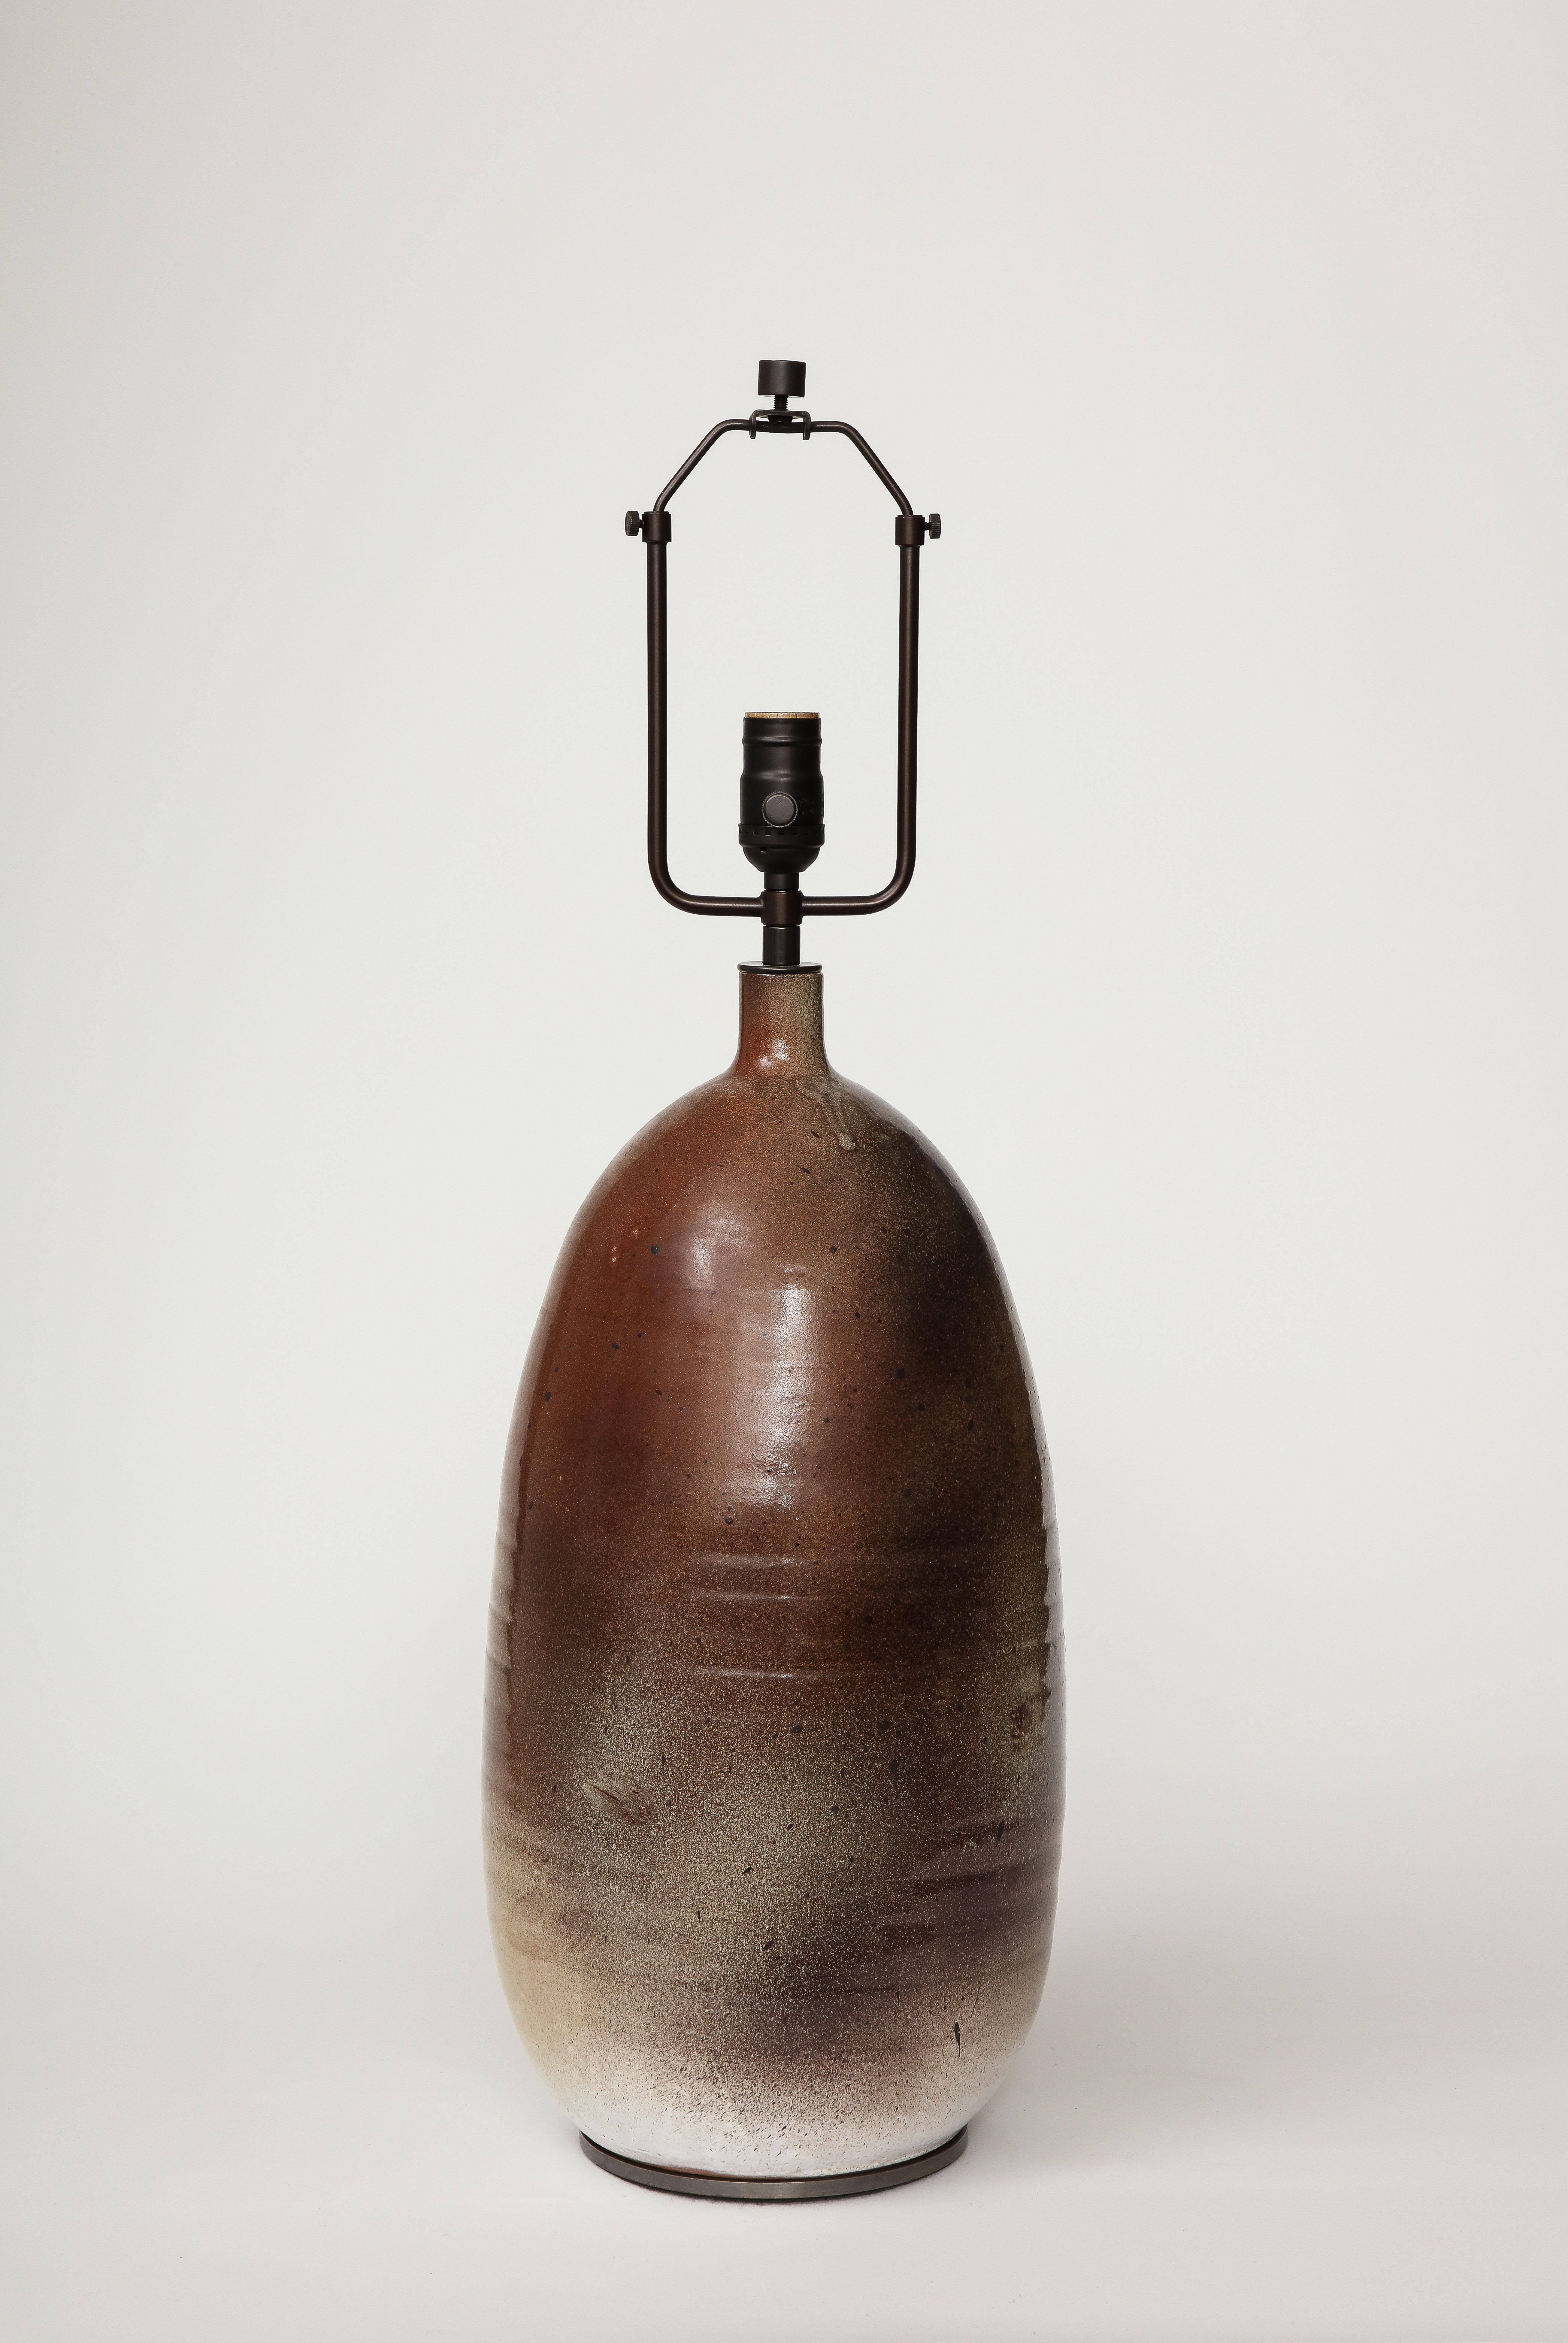 French Glazed Ceramic Table Lamp, Keramos, France, c. 1950